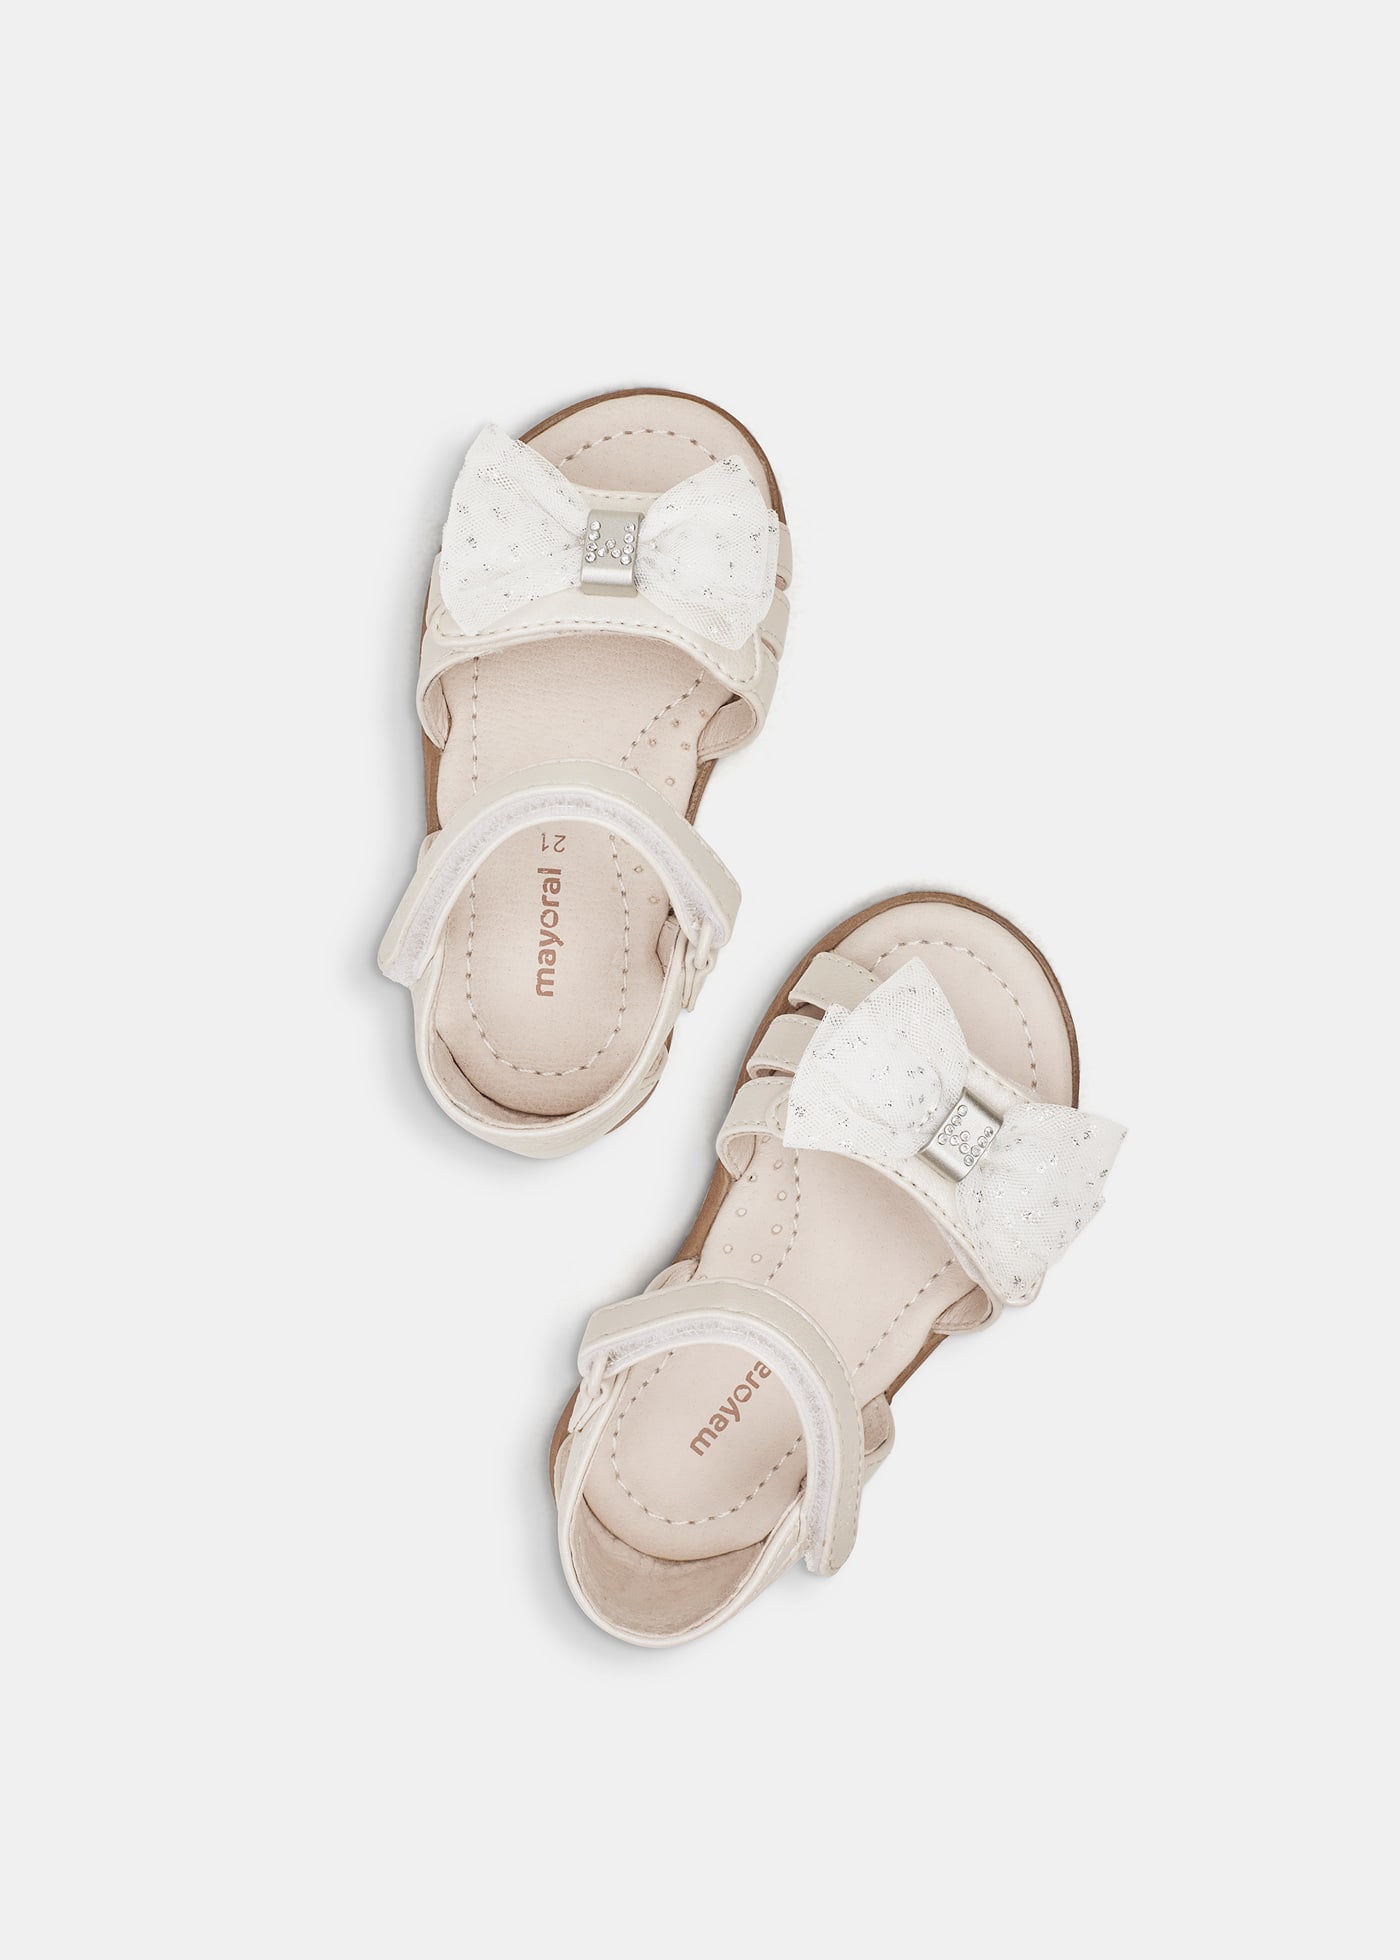 Sandalen festliche Mode nachhaltige Lederinnensohle Baby